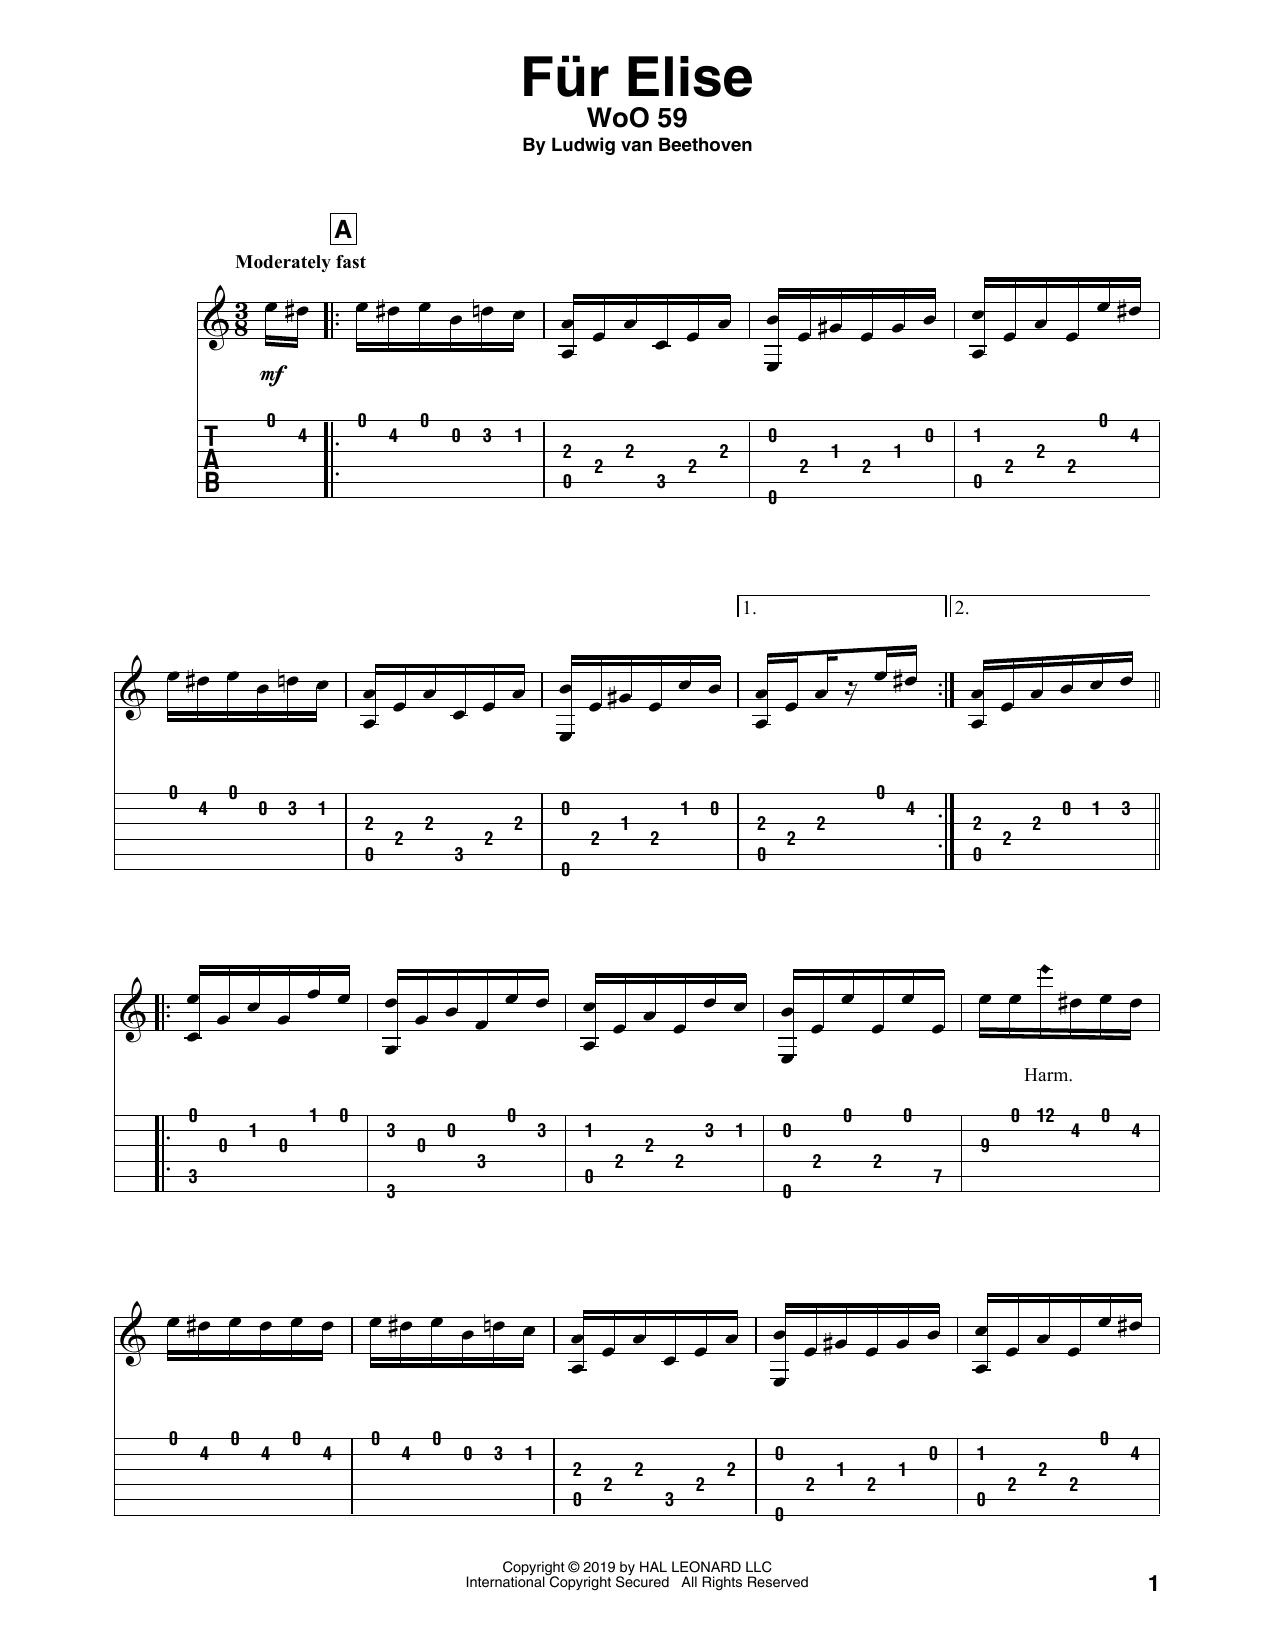 Ludwig van Beethoven Fur Elise, WoO 59 (arr. Bill LaFleur) Sheet Music Notes & Chords for Solo Guitar Tab - Download or Print PDF